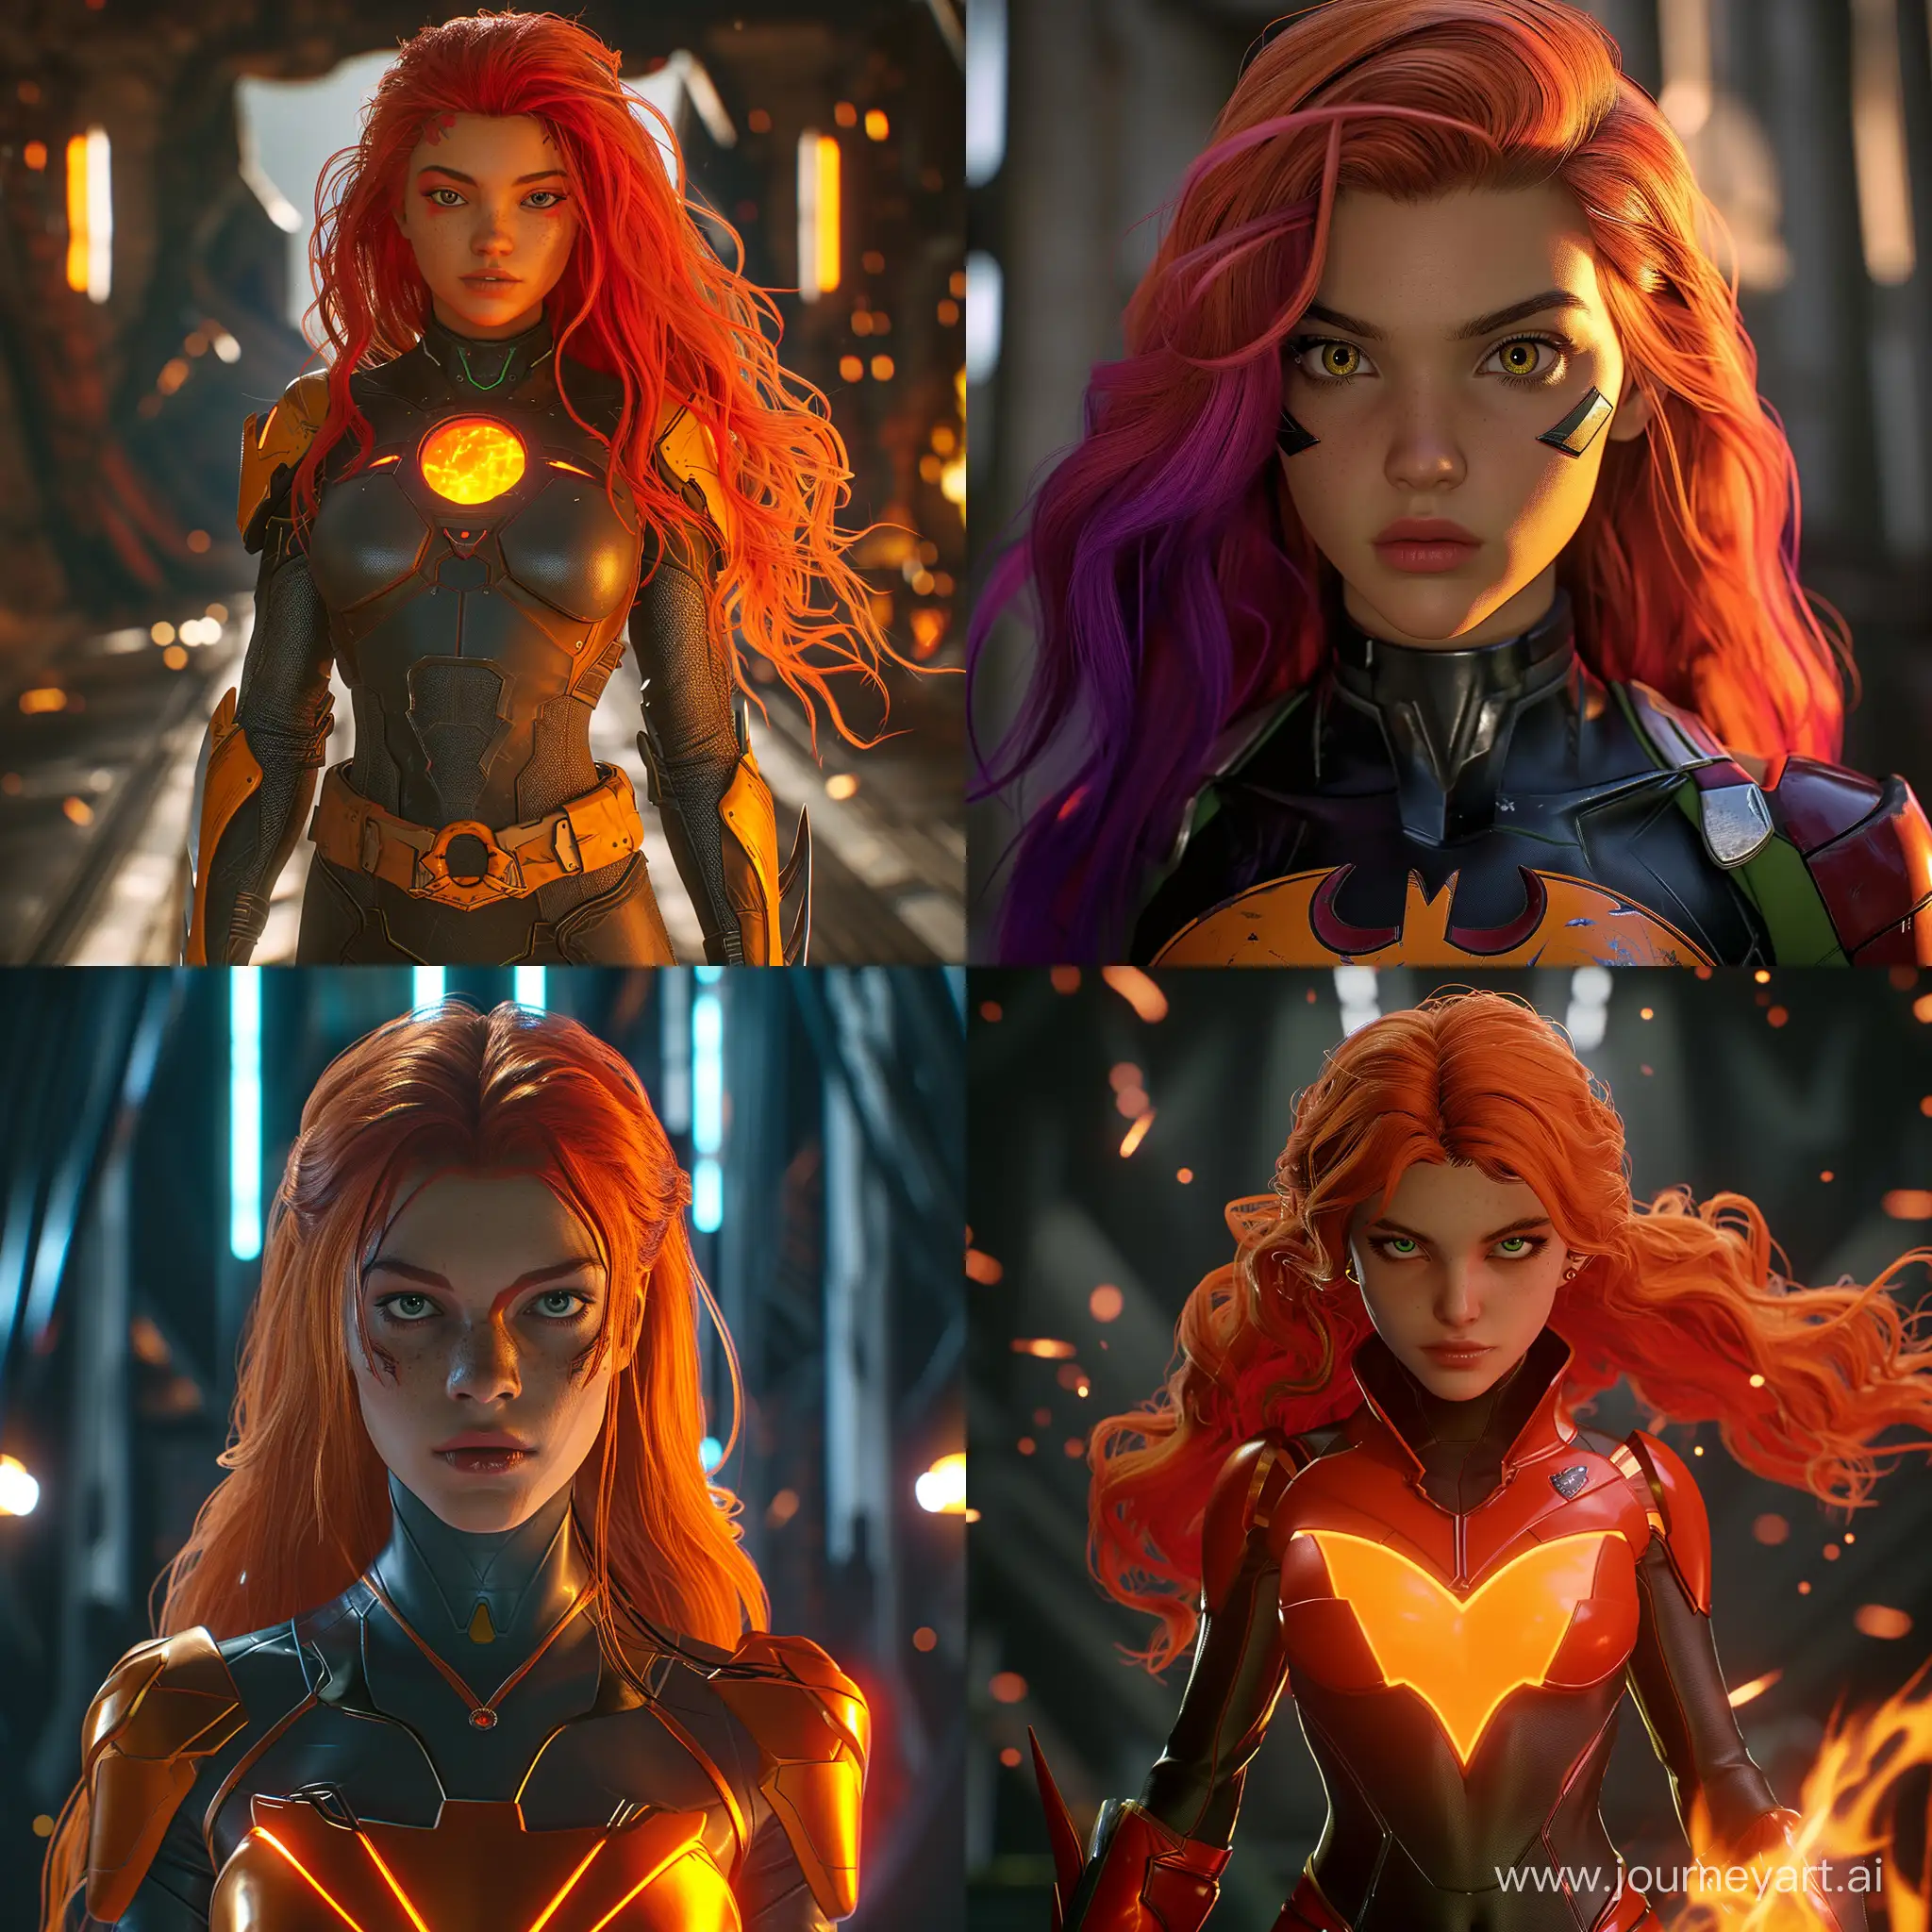 Starfire-from-Teen-Titans-in-UltraUnreal-Engine-5-SciFi-Heroine-Render